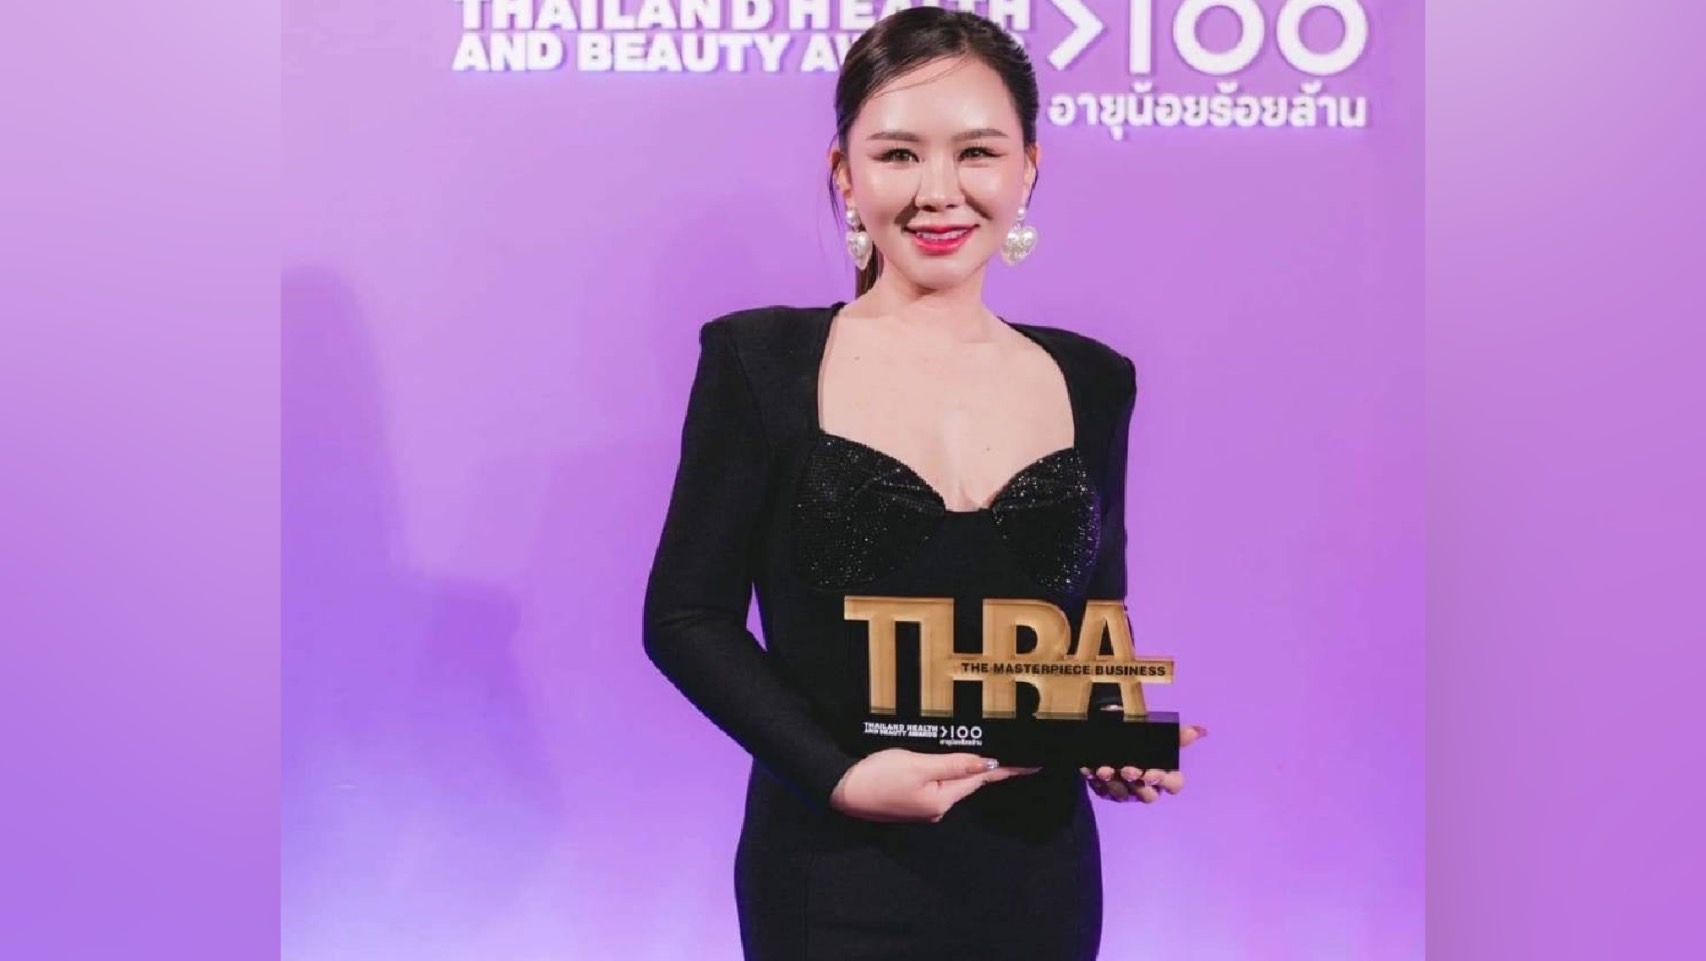 CEO แบรนด์ “เจลว่าน I’Aura” คว้ารางวัล The Masterpiece Business Of Skincare ในงาน “THAILAND HEALTH AND BEAUTY AWARDS 2023”